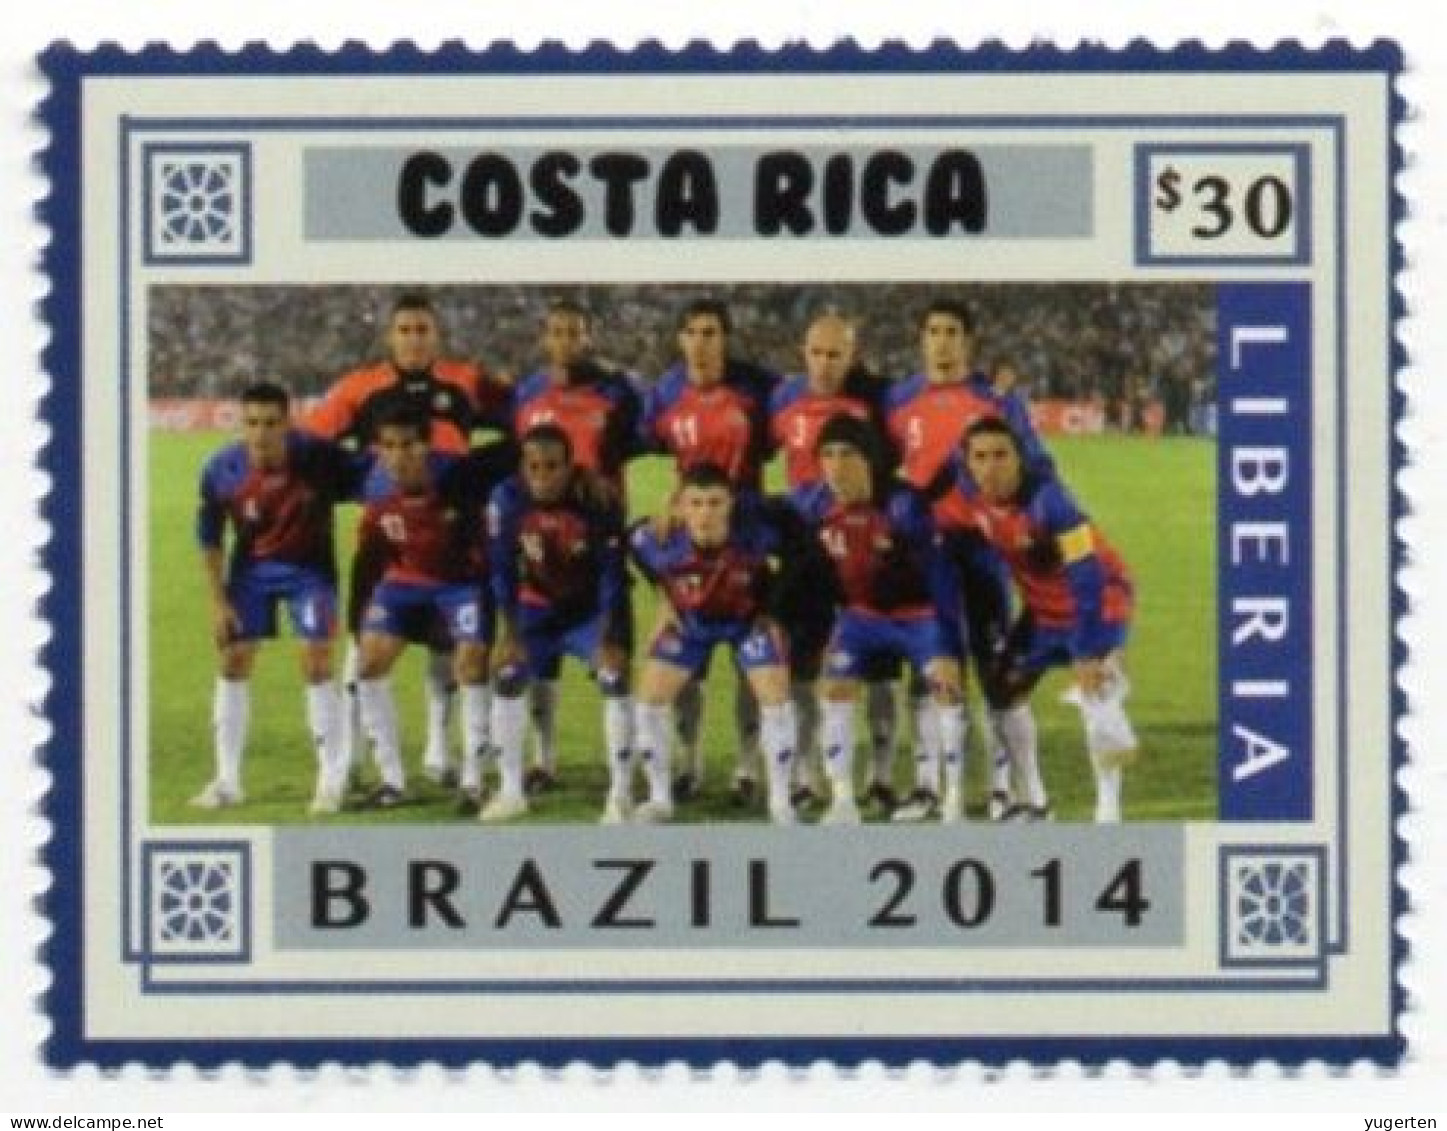 LIBERIA 2014 - 1v - MNH - Costa Rica Team - Brazil World Football Championship - Soccer Calcio - Football - World Cup - 2014 – Brasilien